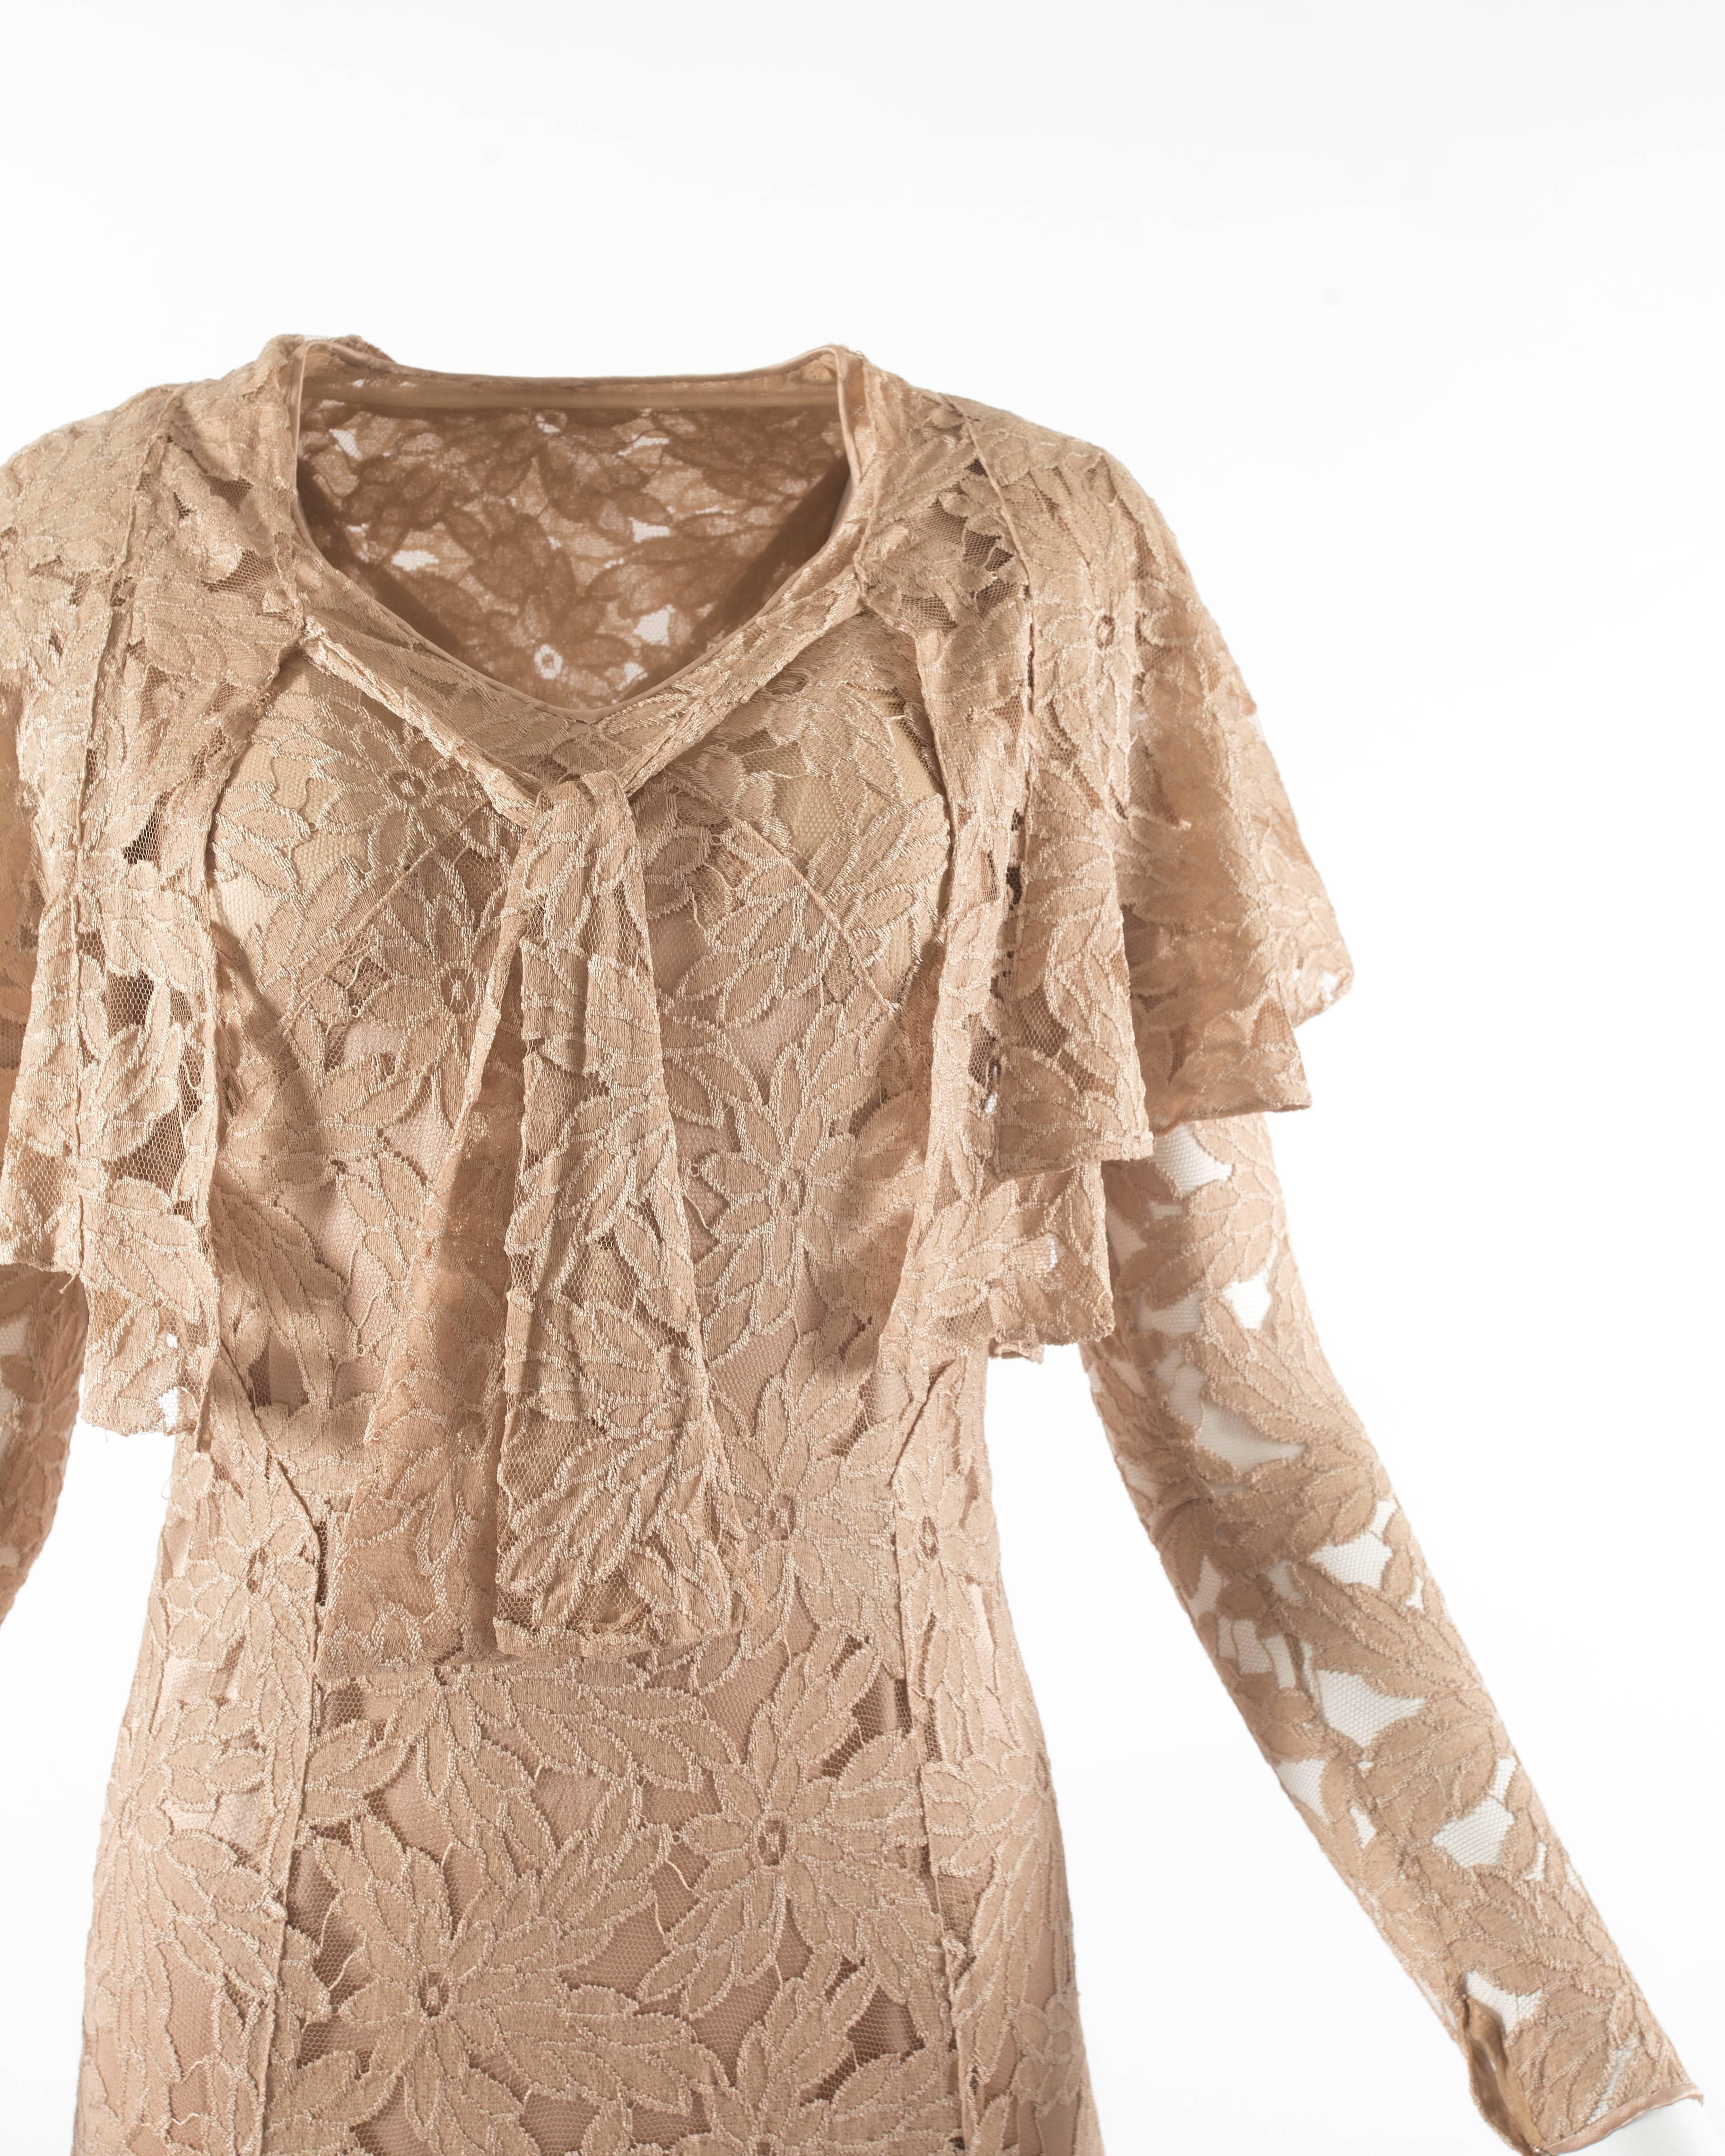 1930s champagne silk lace bias cut evening dress with matching bolero